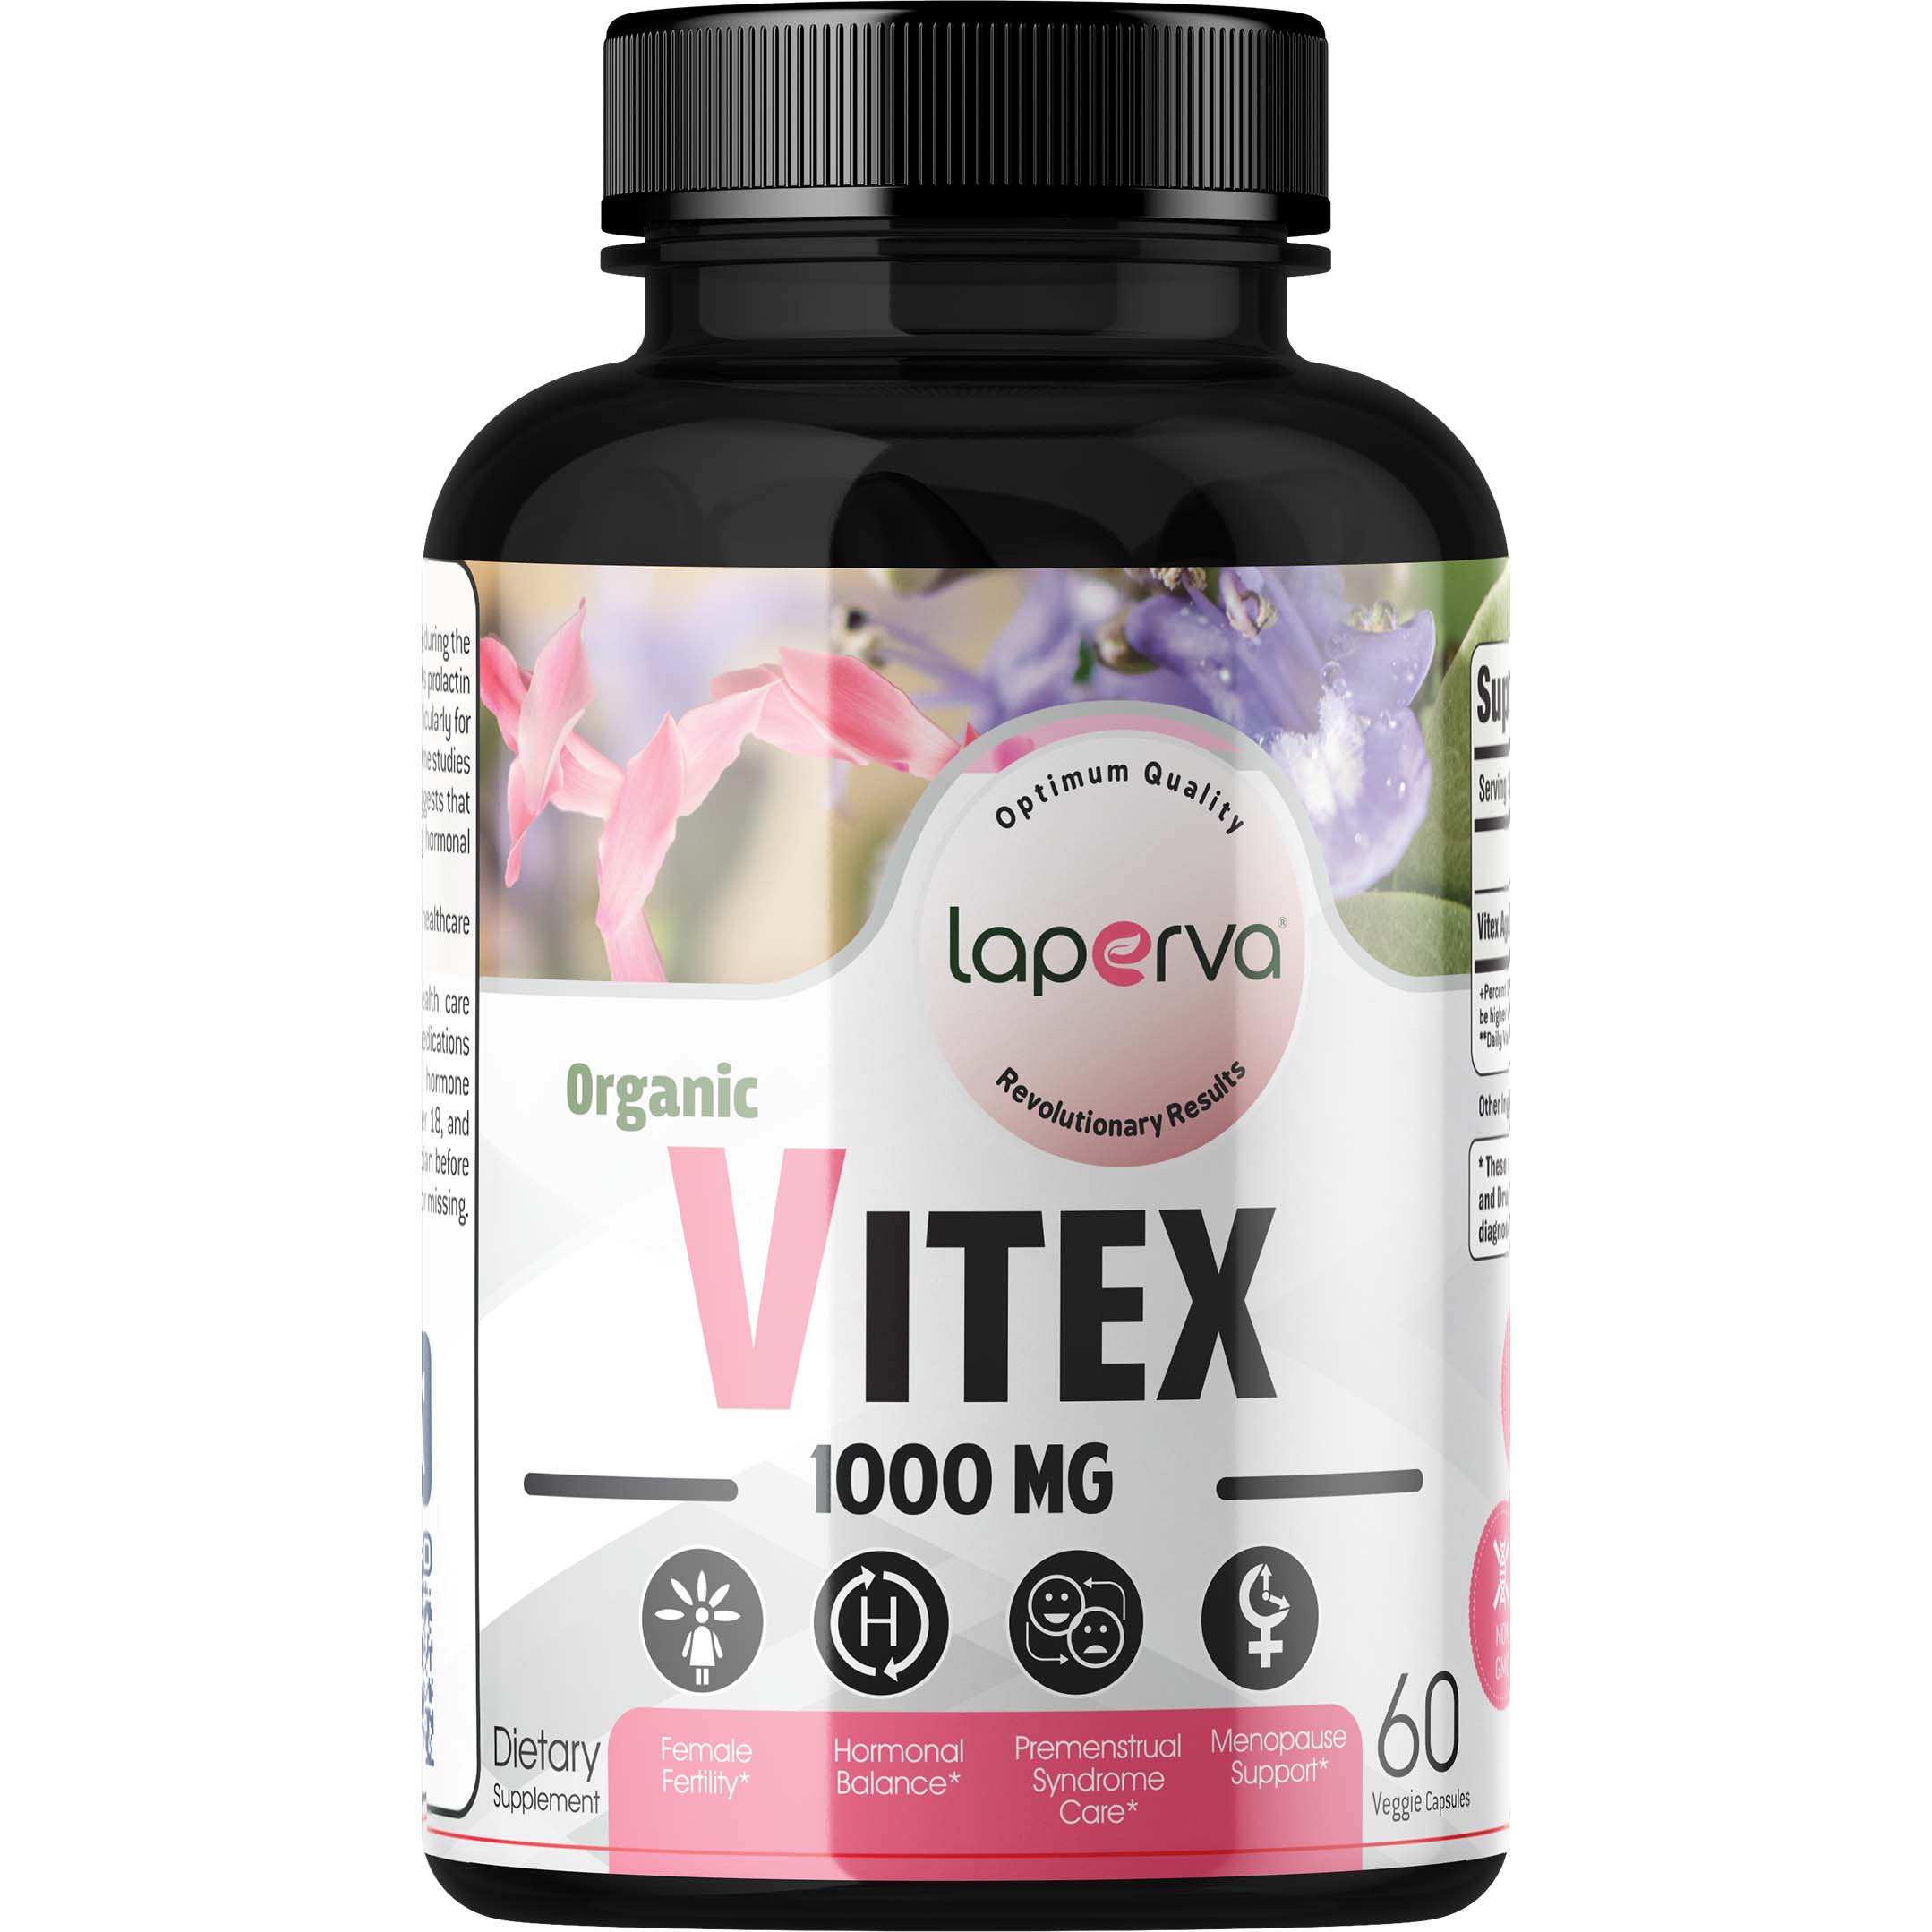 Laperva Organic Vitex, 1000 mg, 60 Veggie Capsules